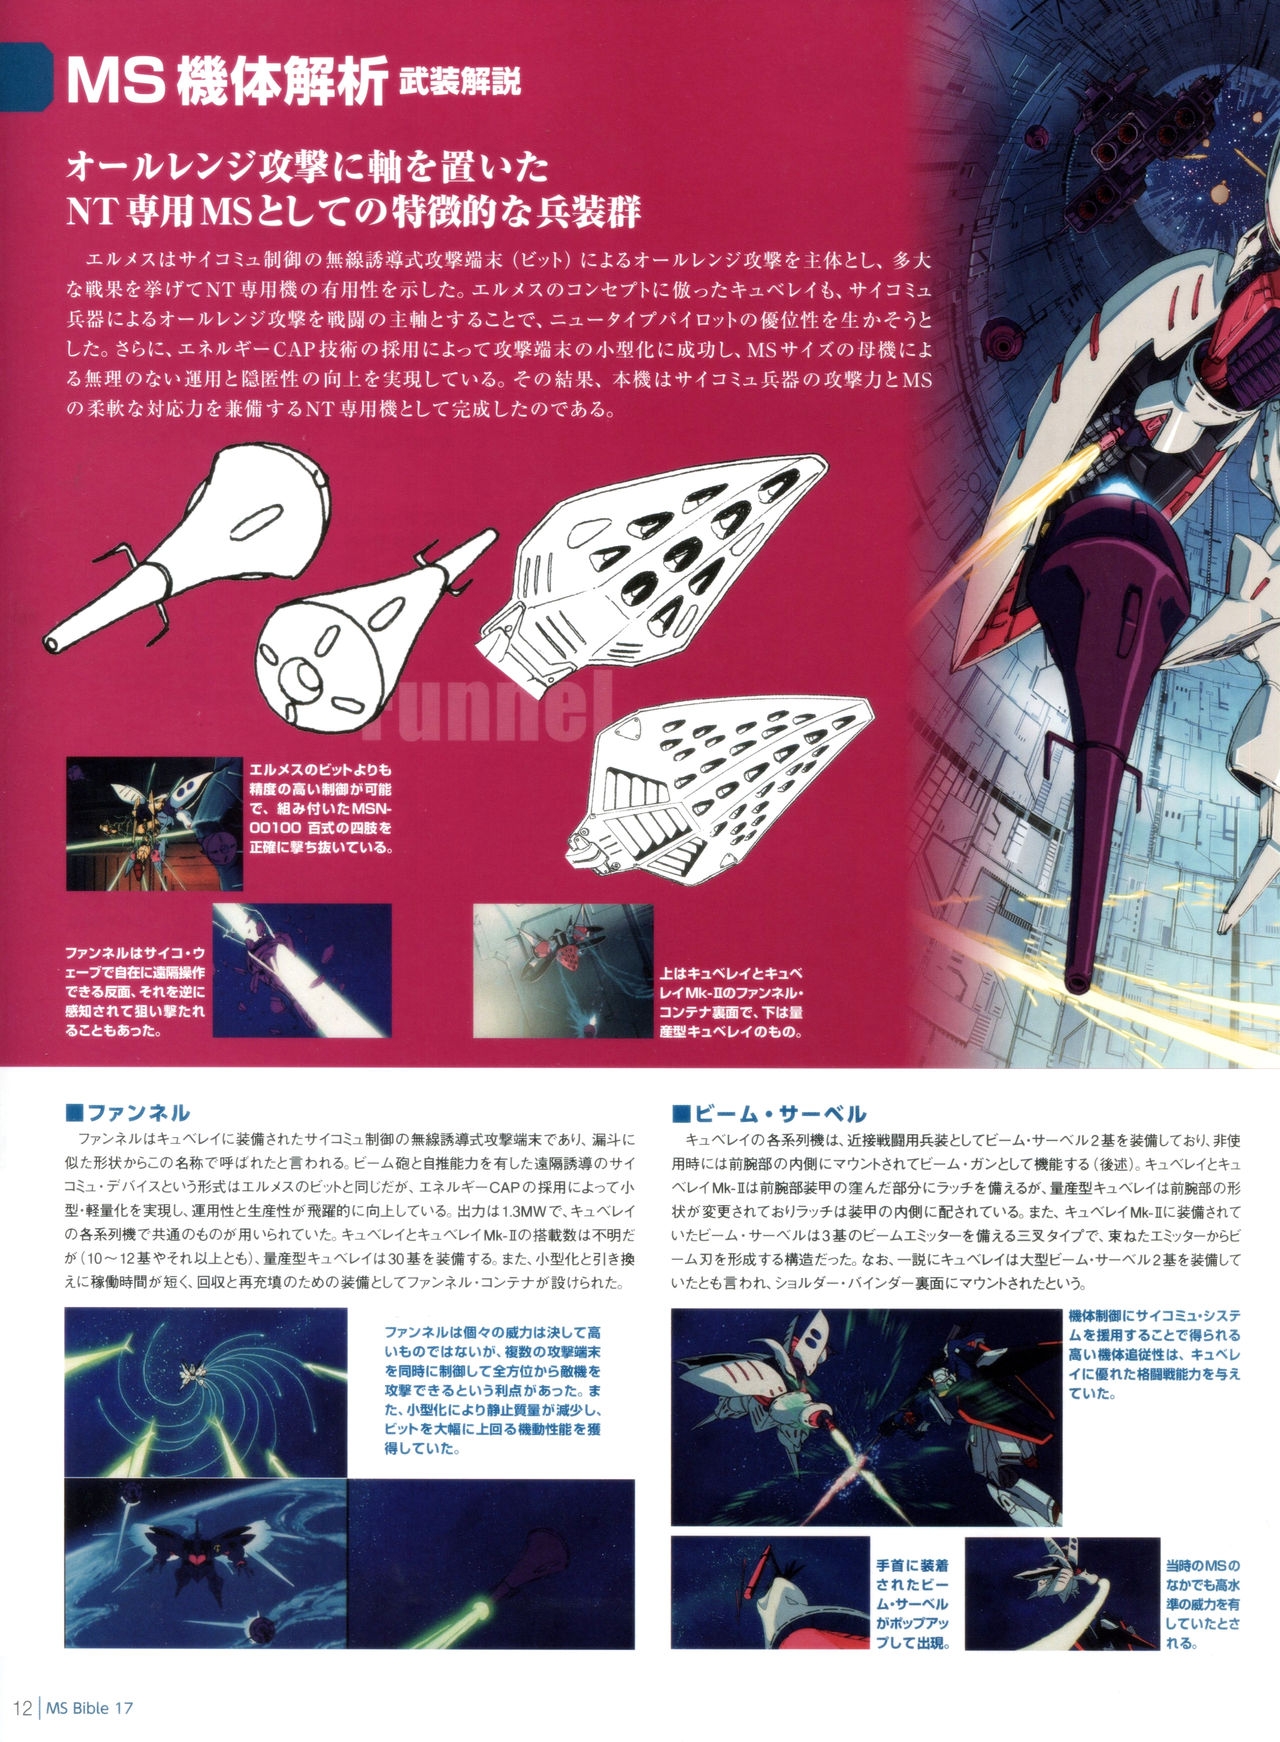 Gundam Mobile Suit Bible 17 13